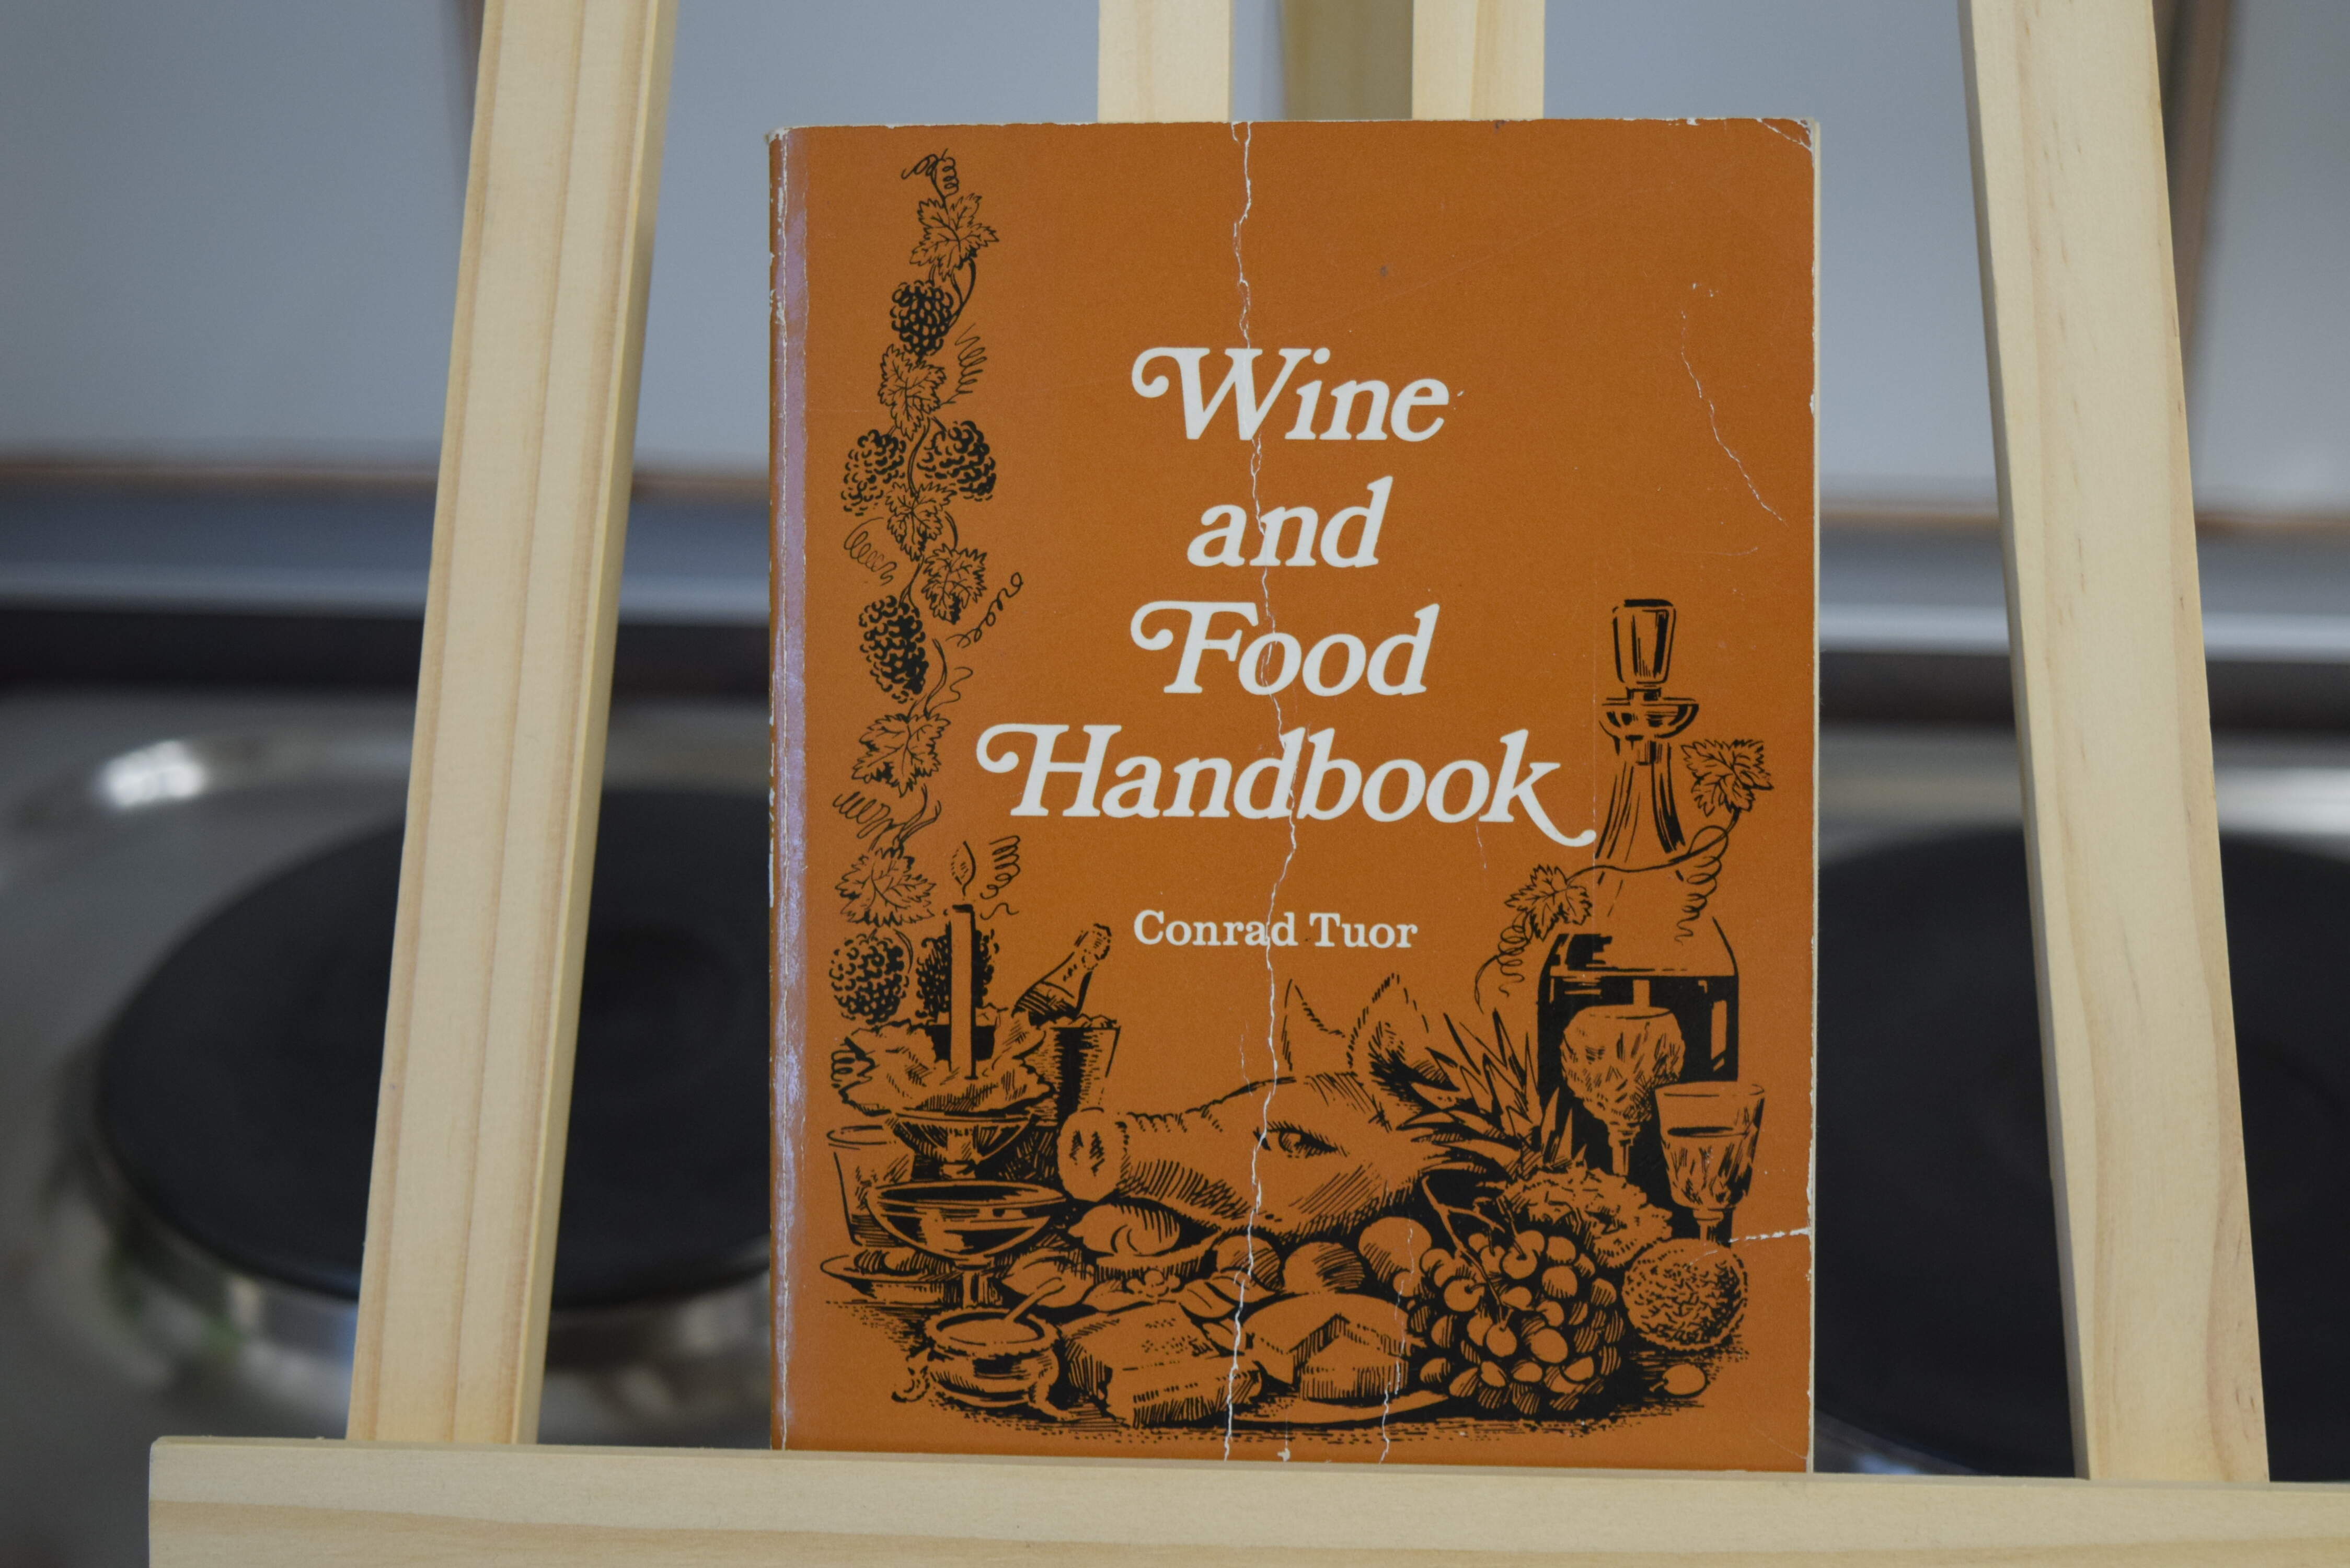 Wine and food Hanbook